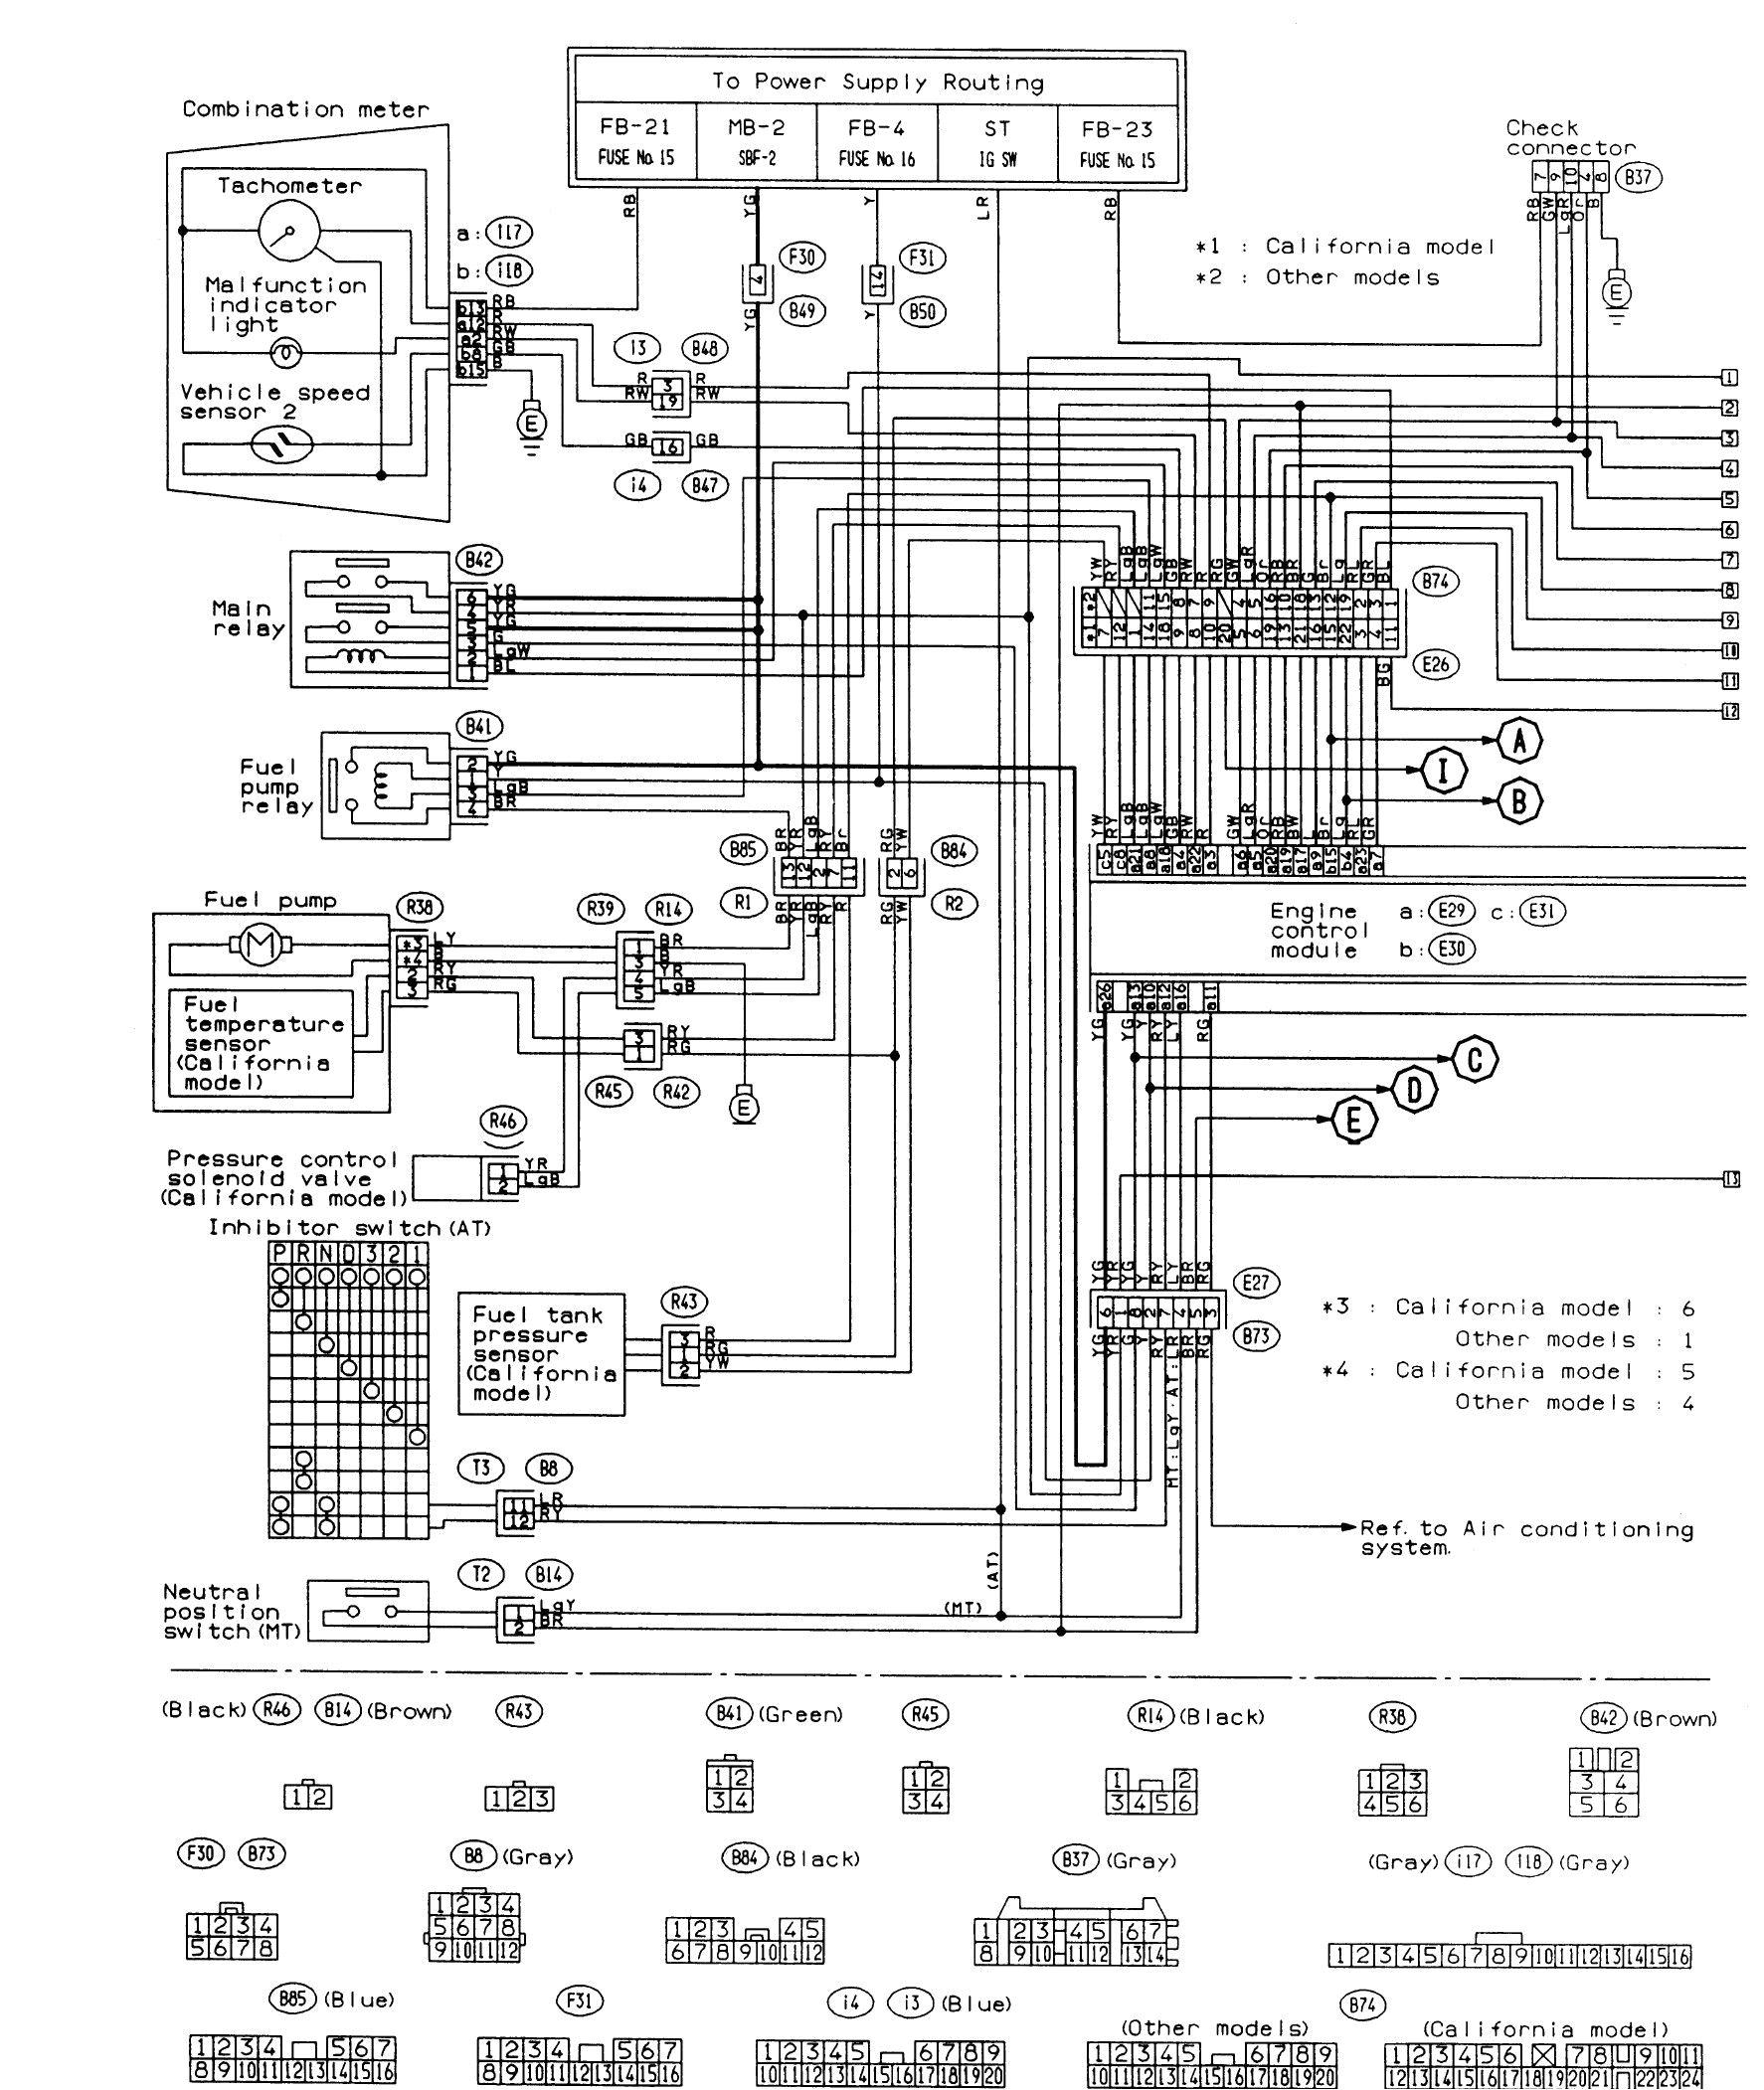 2010 Subaru forester Wiring Diagram Subaru Sti Wiring Diagram Blog Wiring Diagram